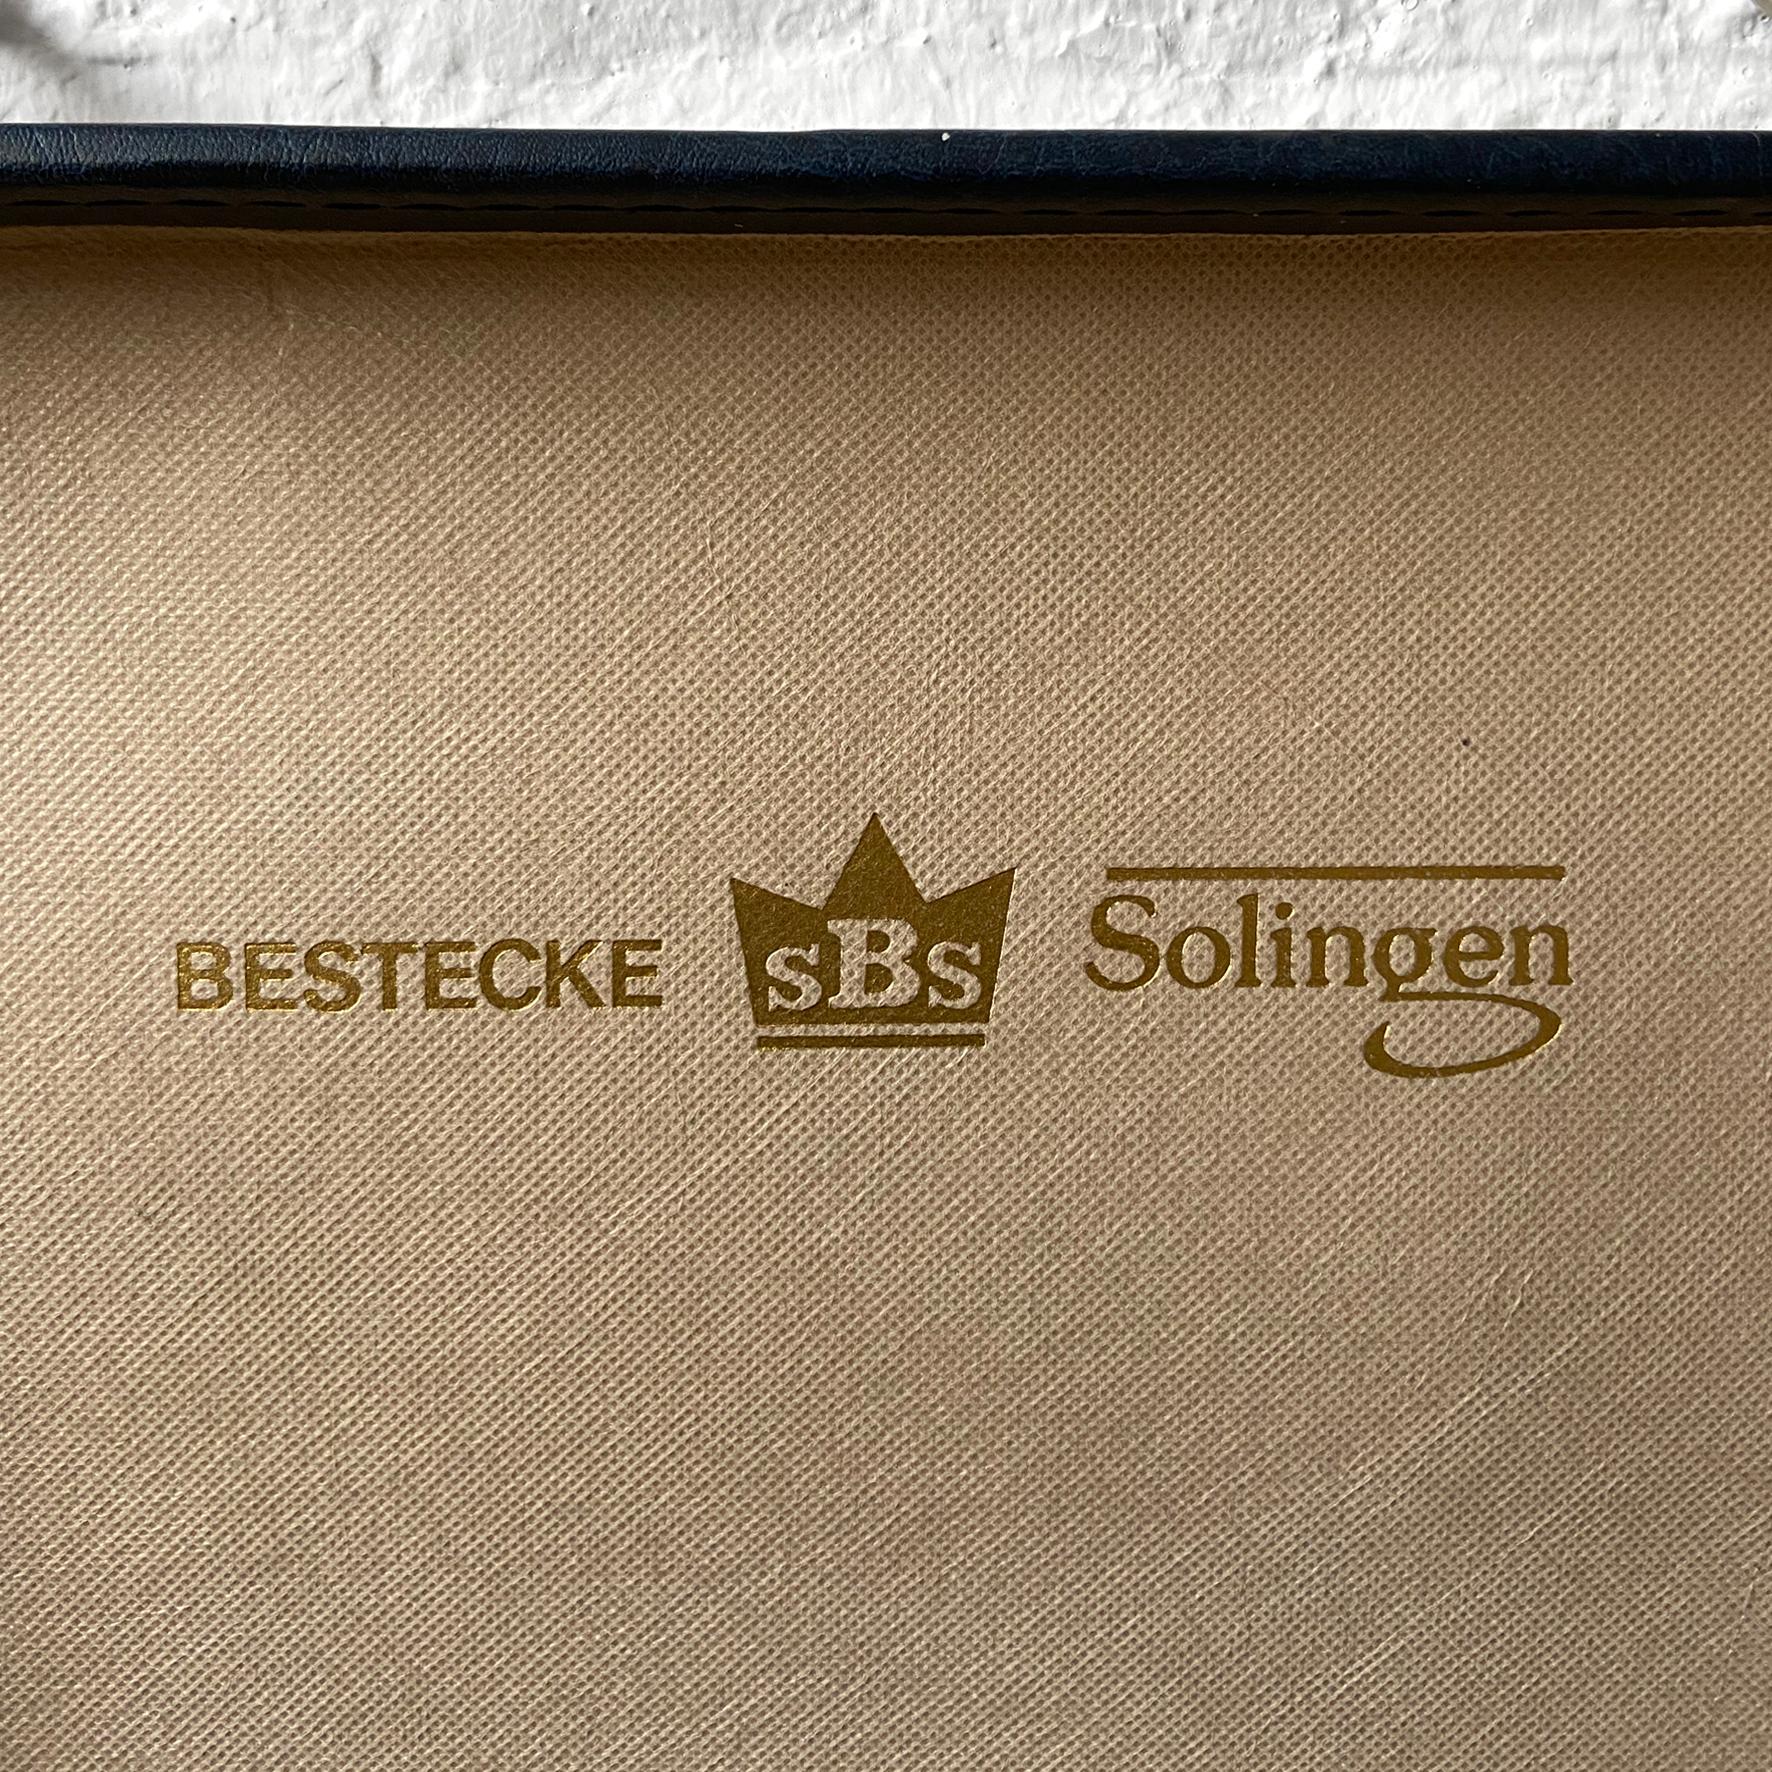 Bestecke Solingen German 23/24 Karat Gold-Plated 70pcs / 12 Person Cutlery Set For Sale 10